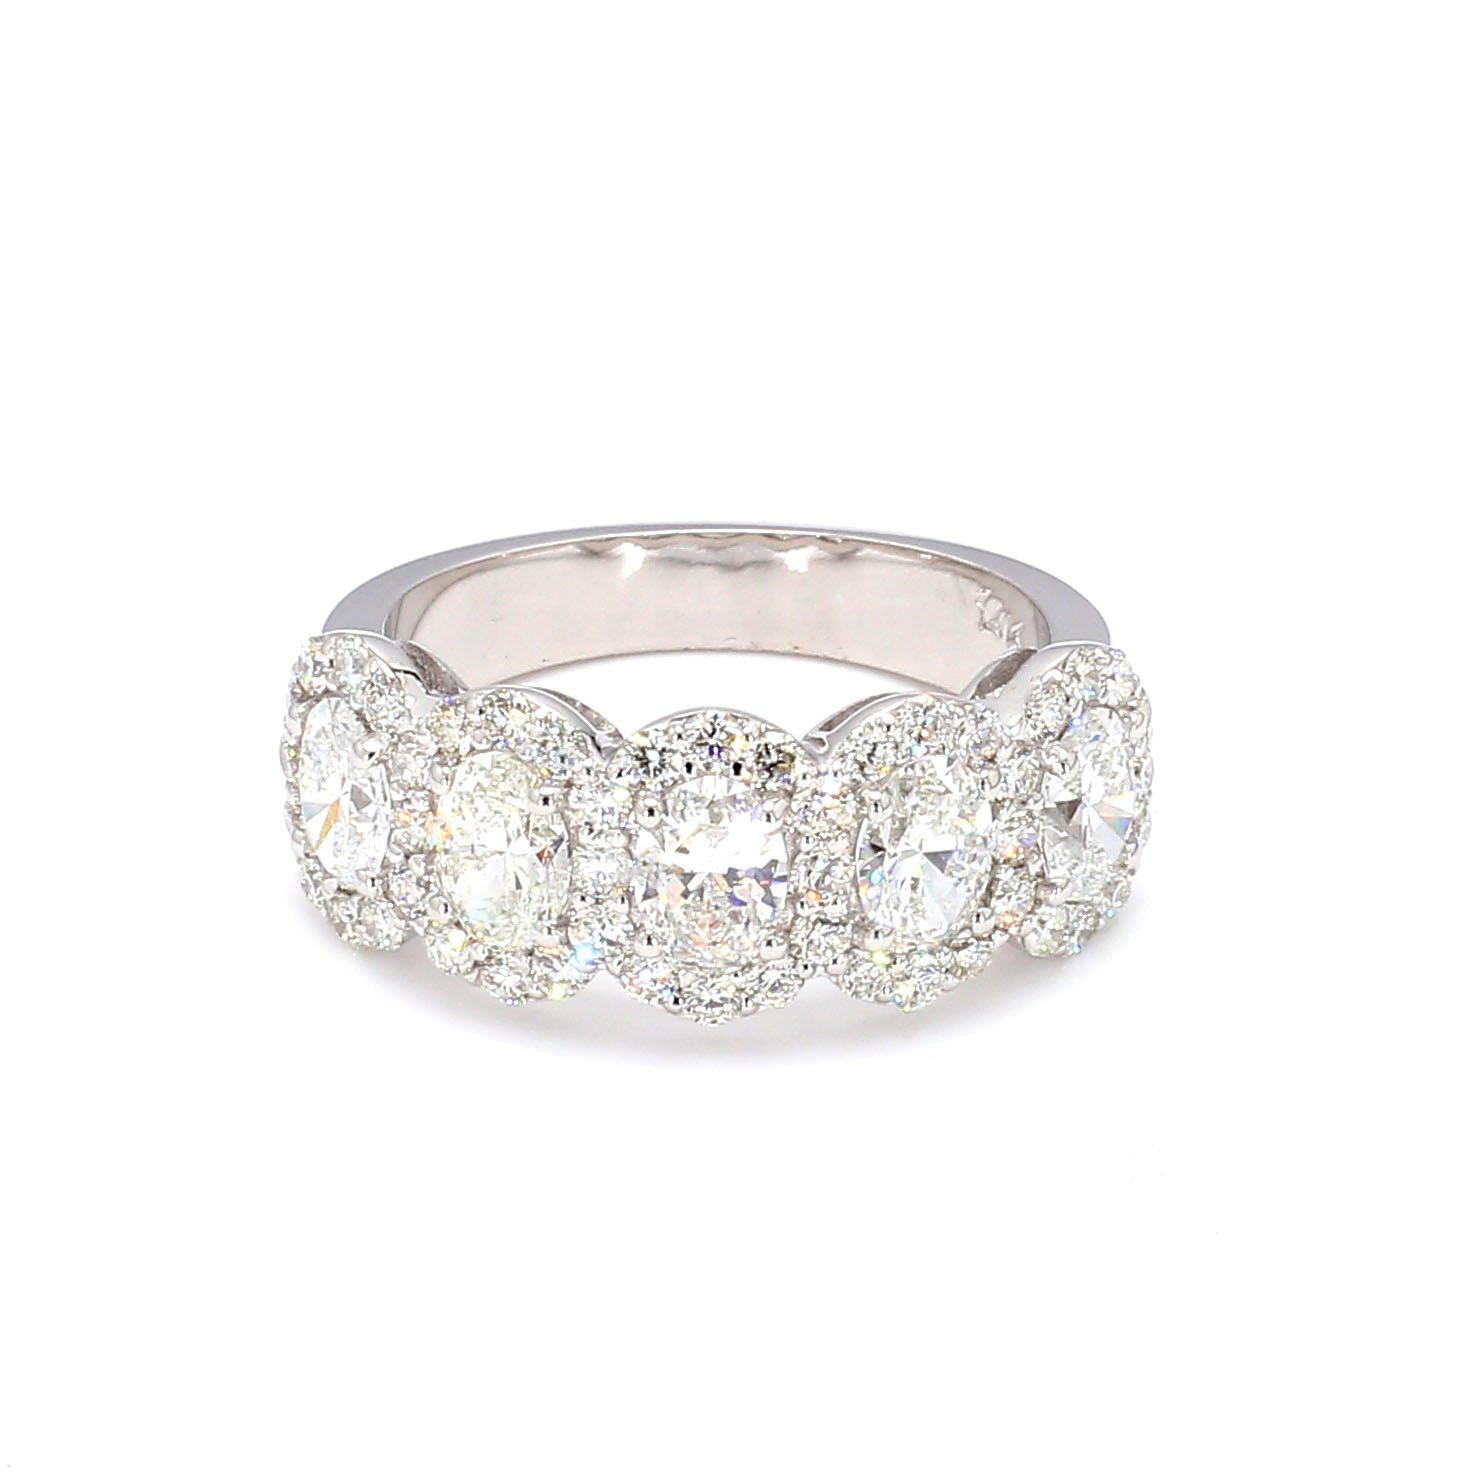  Five Stone Diamond Halo Ring  in 18k White Gold Bailey s 